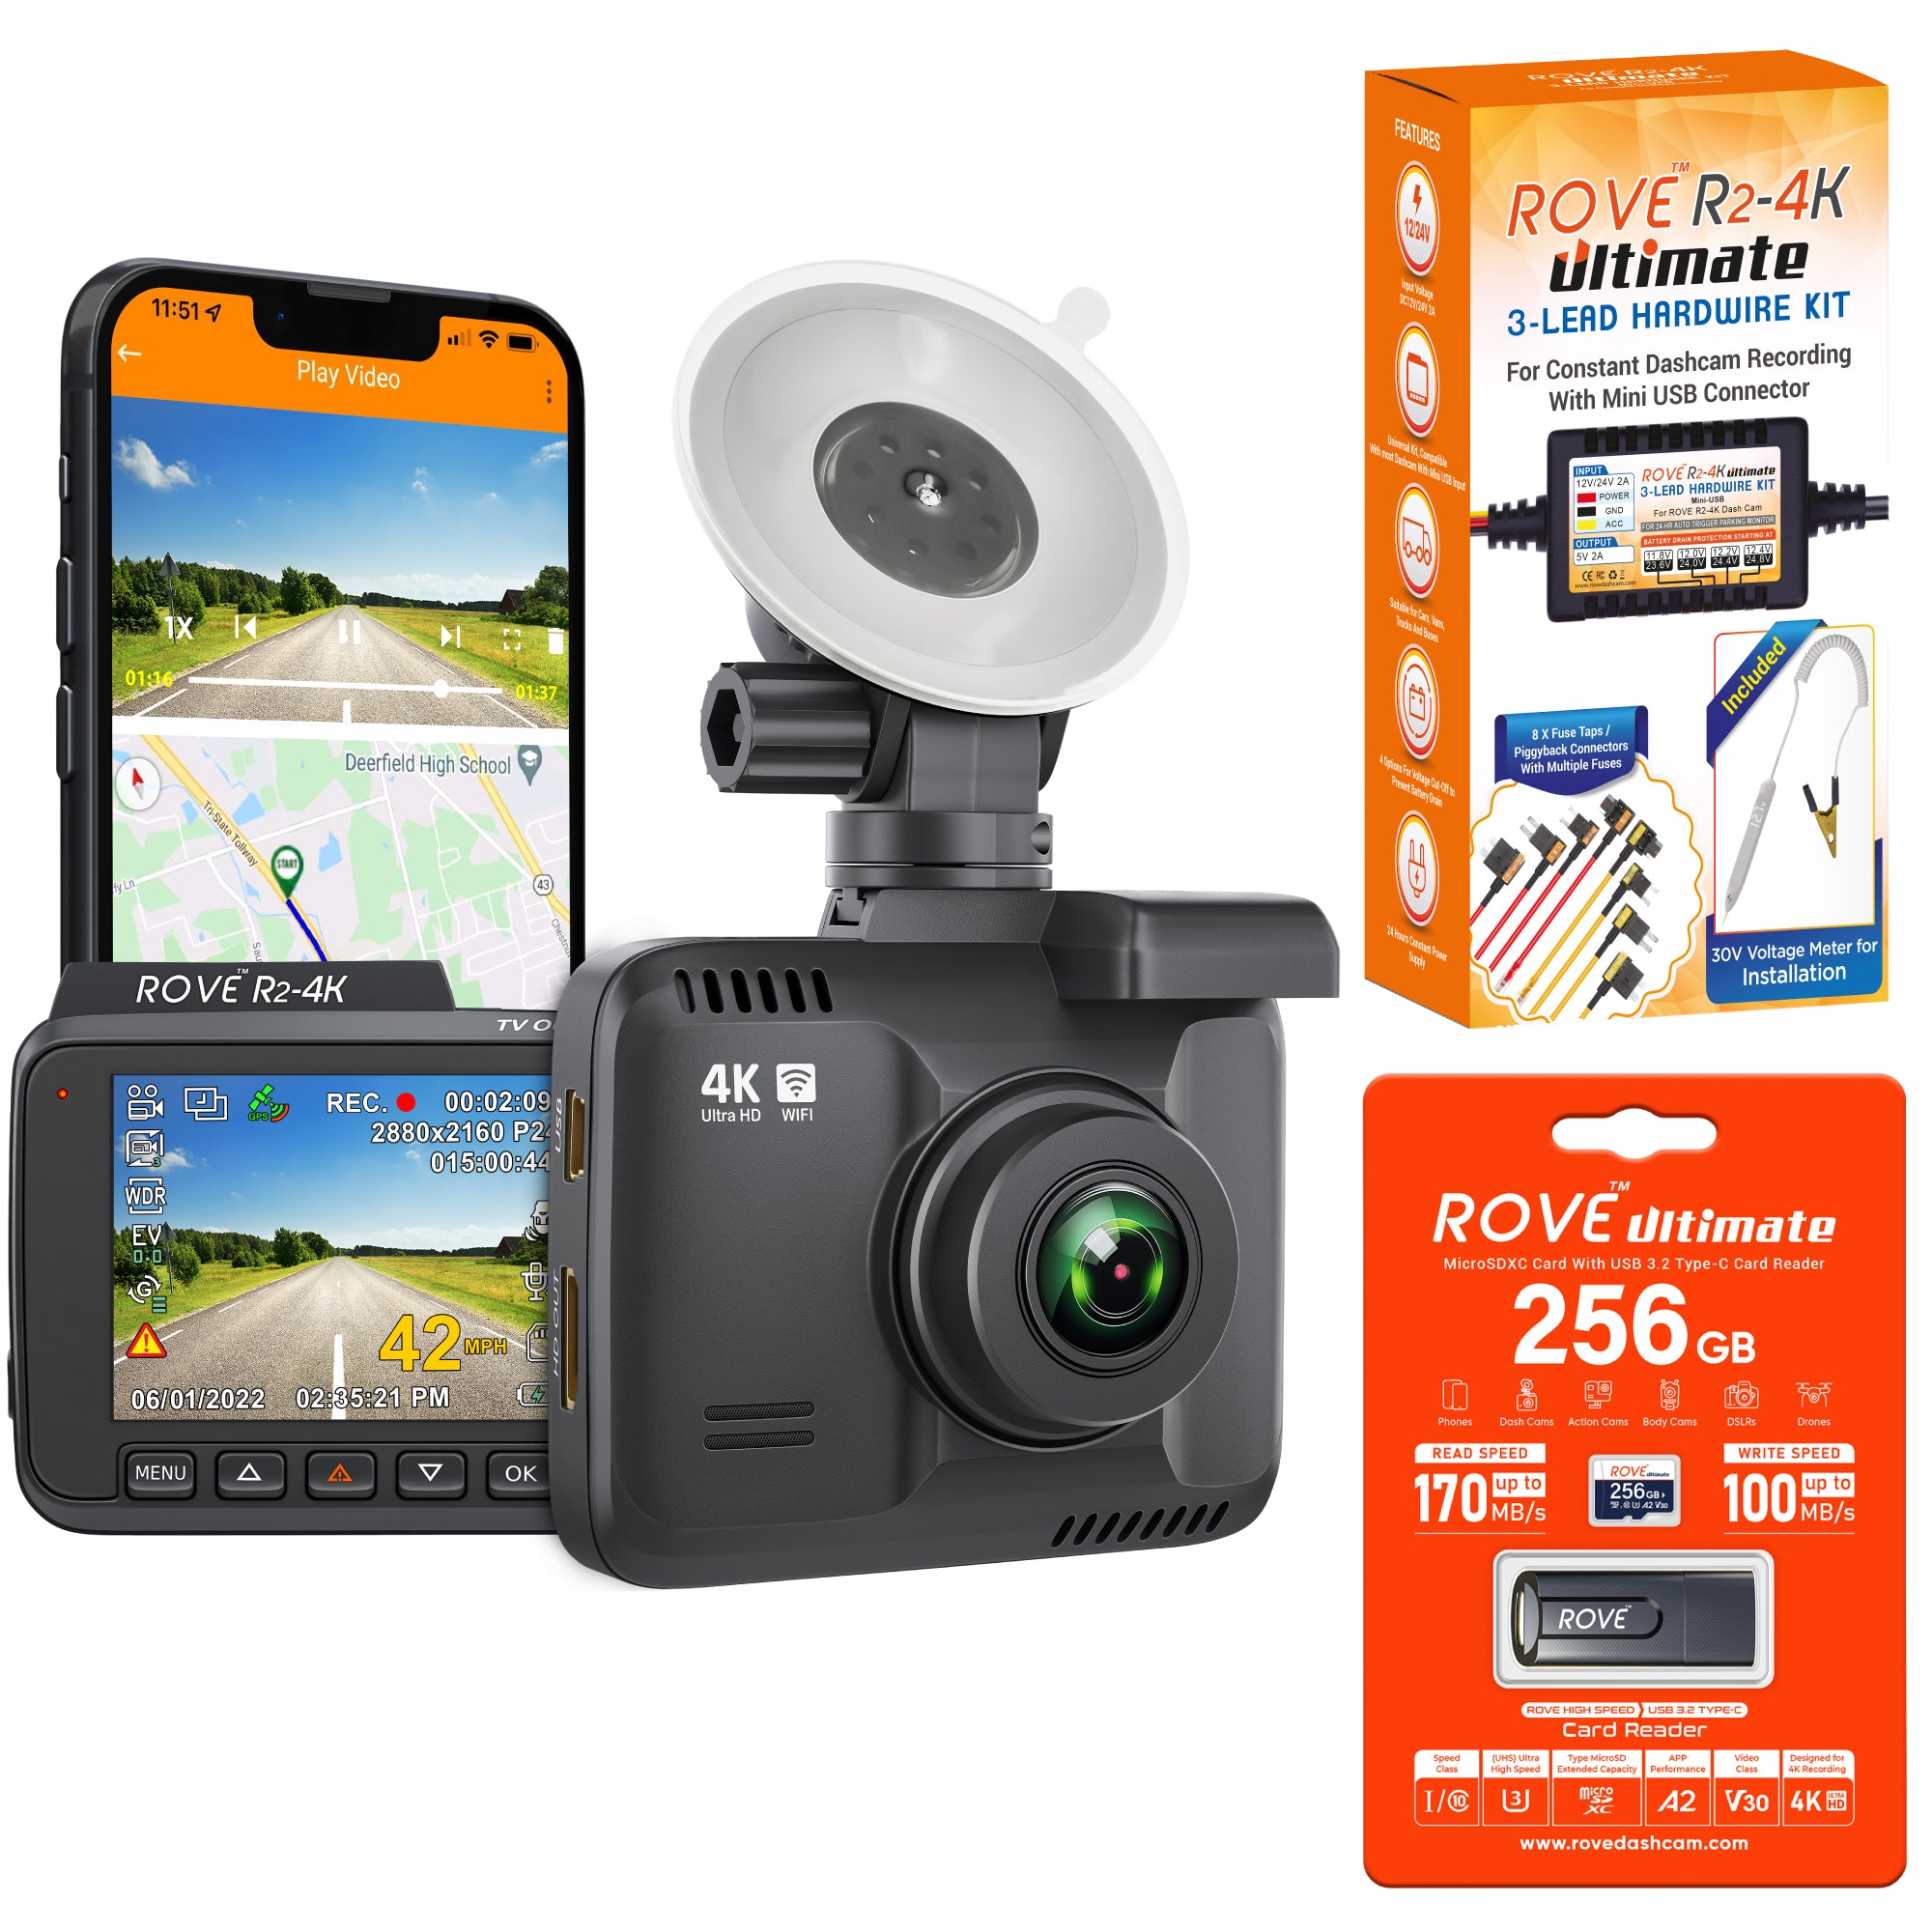 Rove R2-4K Dash Cam 4K Ultra HD 2160P Dash Board Camera Built In WiFi & GPS - With bundle variation of Memory Card & R2-4K Hardwire Kit